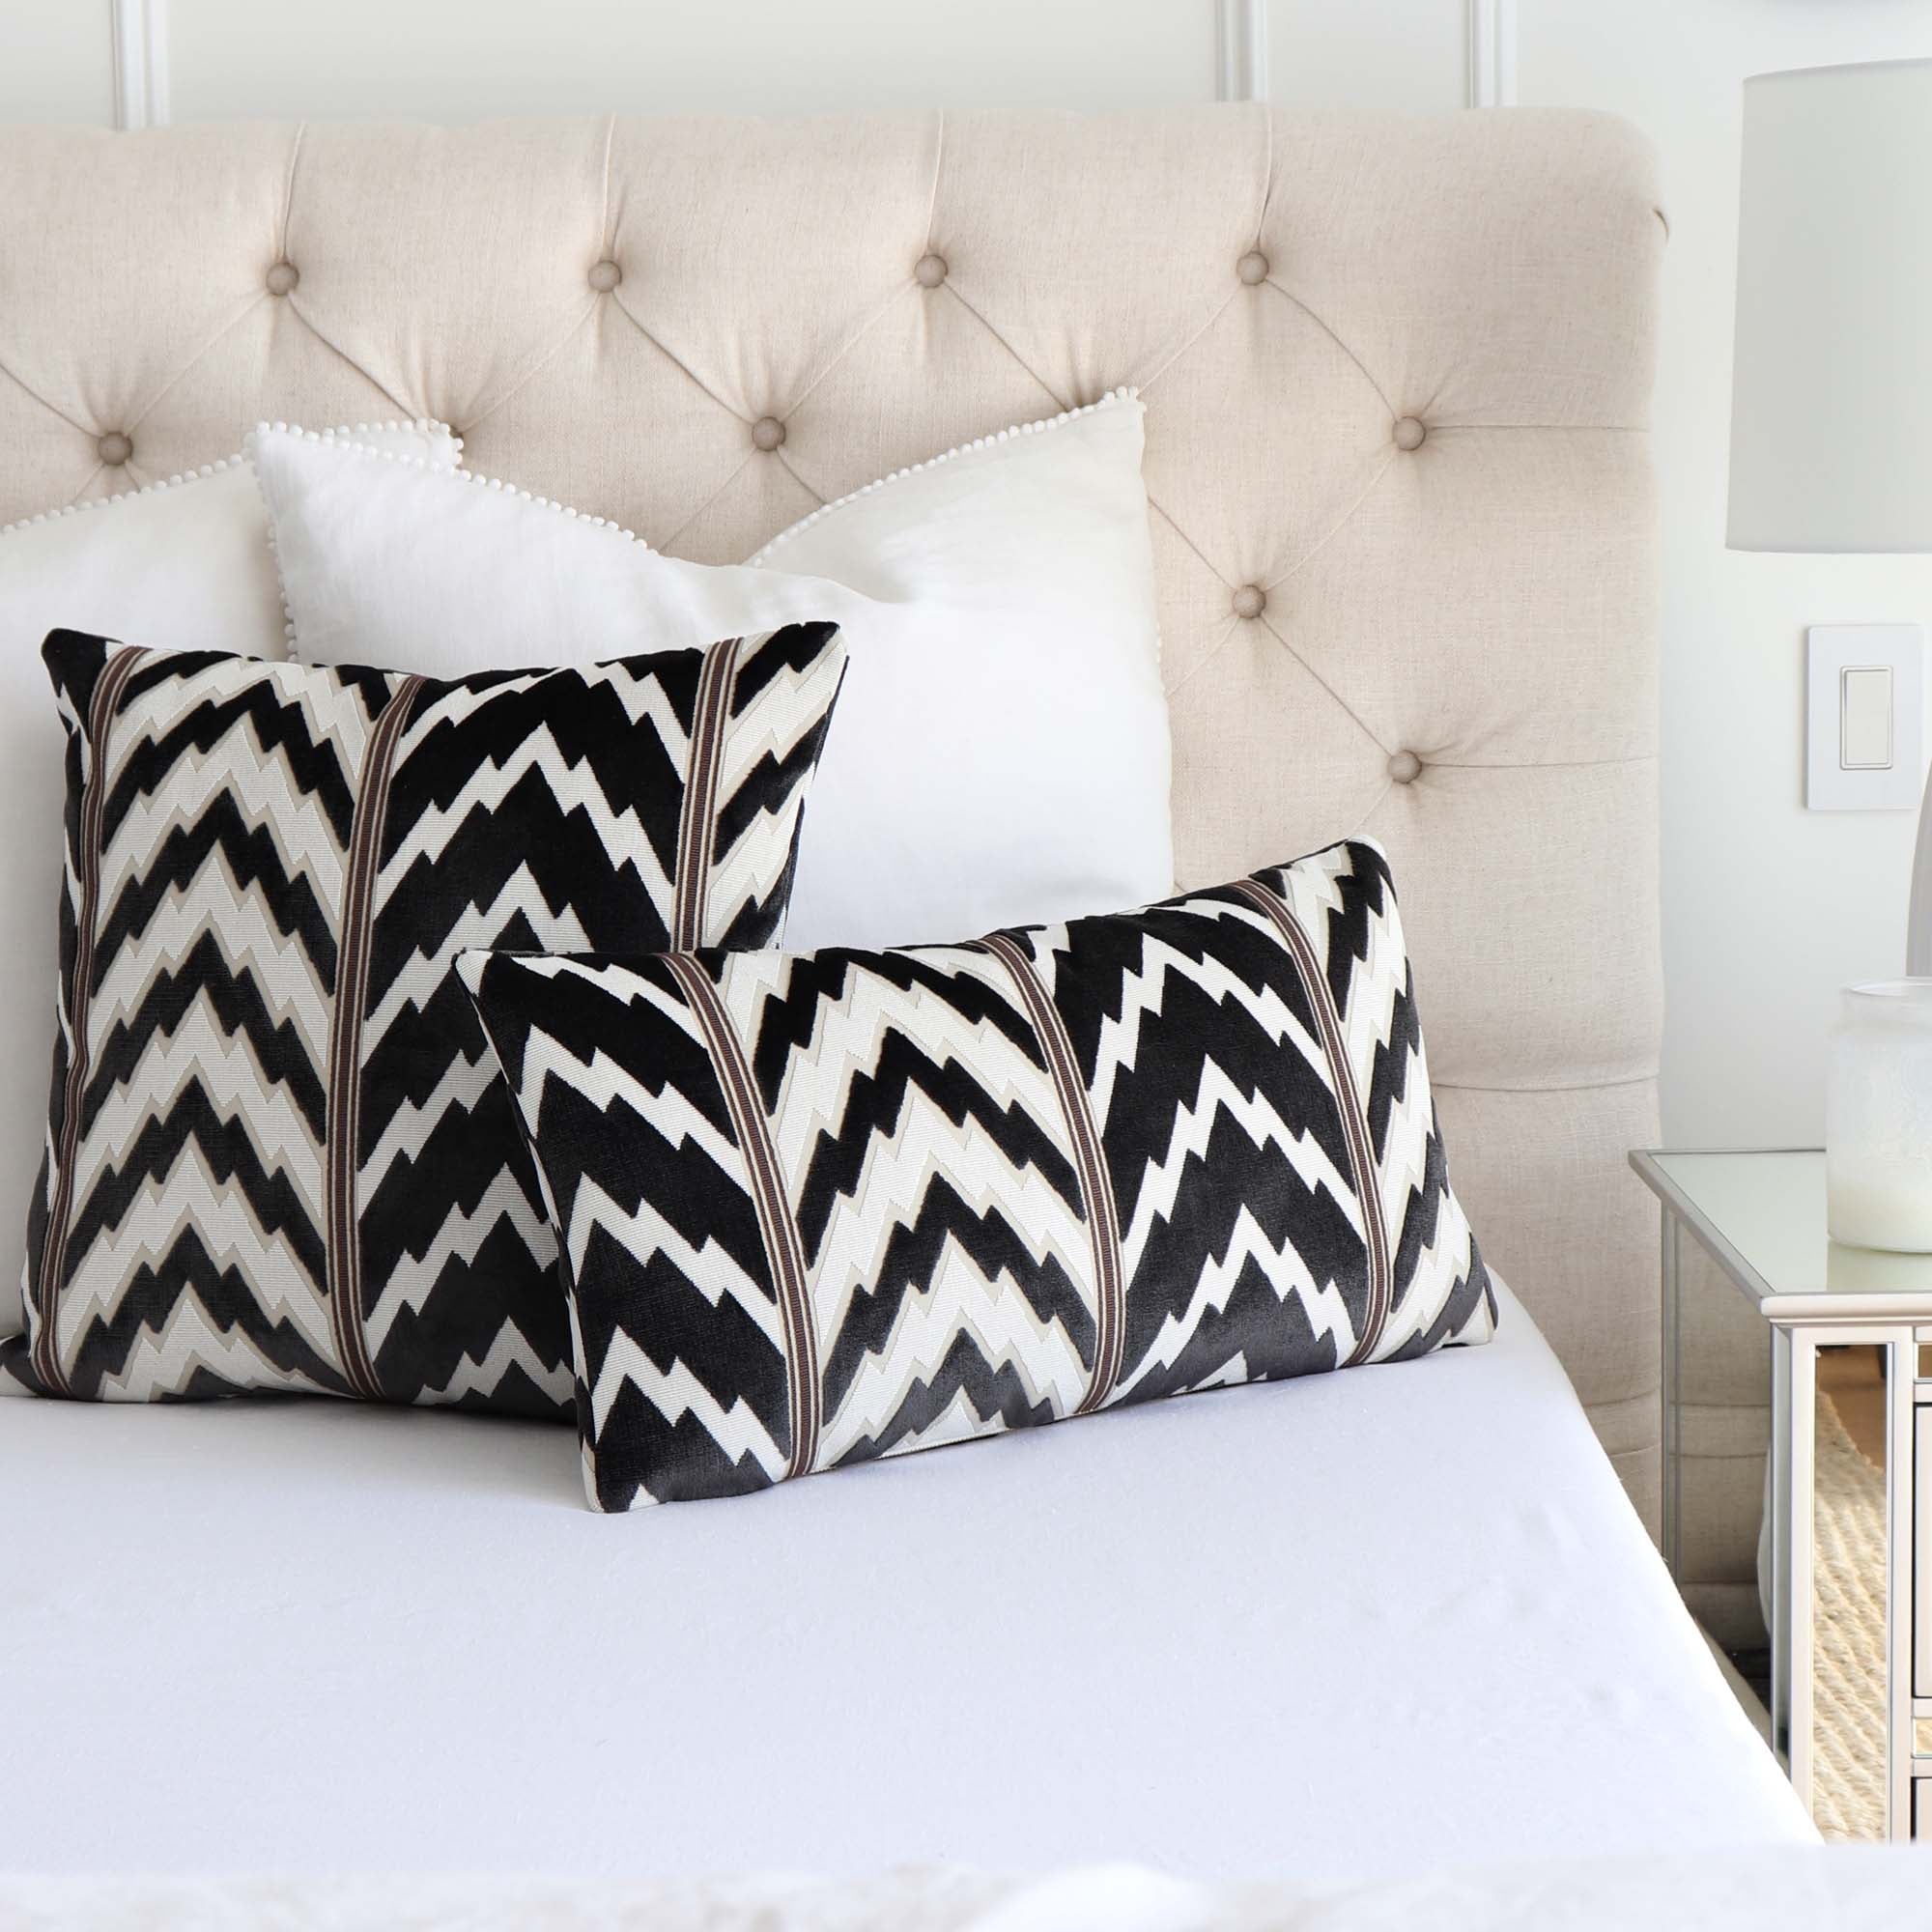 Schumacher Florentine Velvet Black Chevron Designer Luxury Decorative Throw Pillow Cover on Bed with White Square Euro Shams